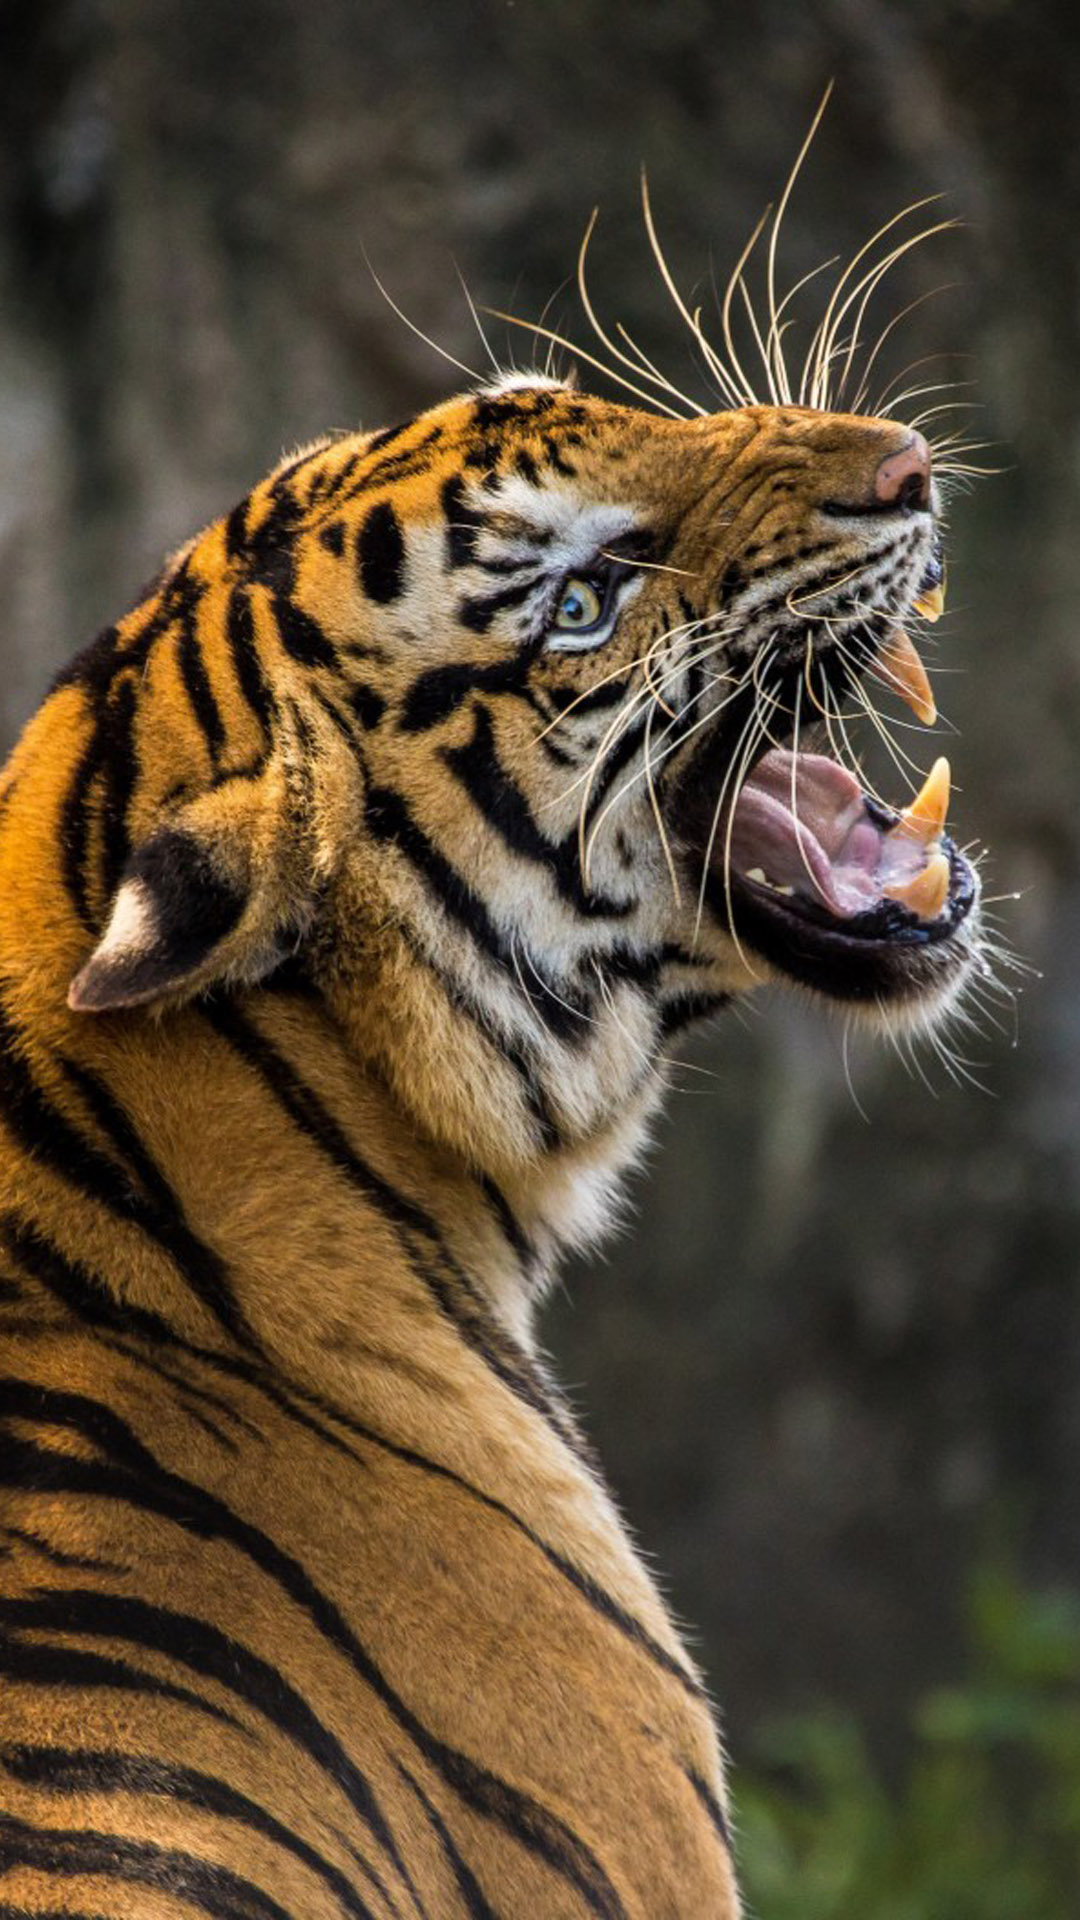 1080x1920 Roaring Tiger 4K Ultra HD Mobile Wallpaper | Tiger wallpaper, Tiger pictures, Tiger images